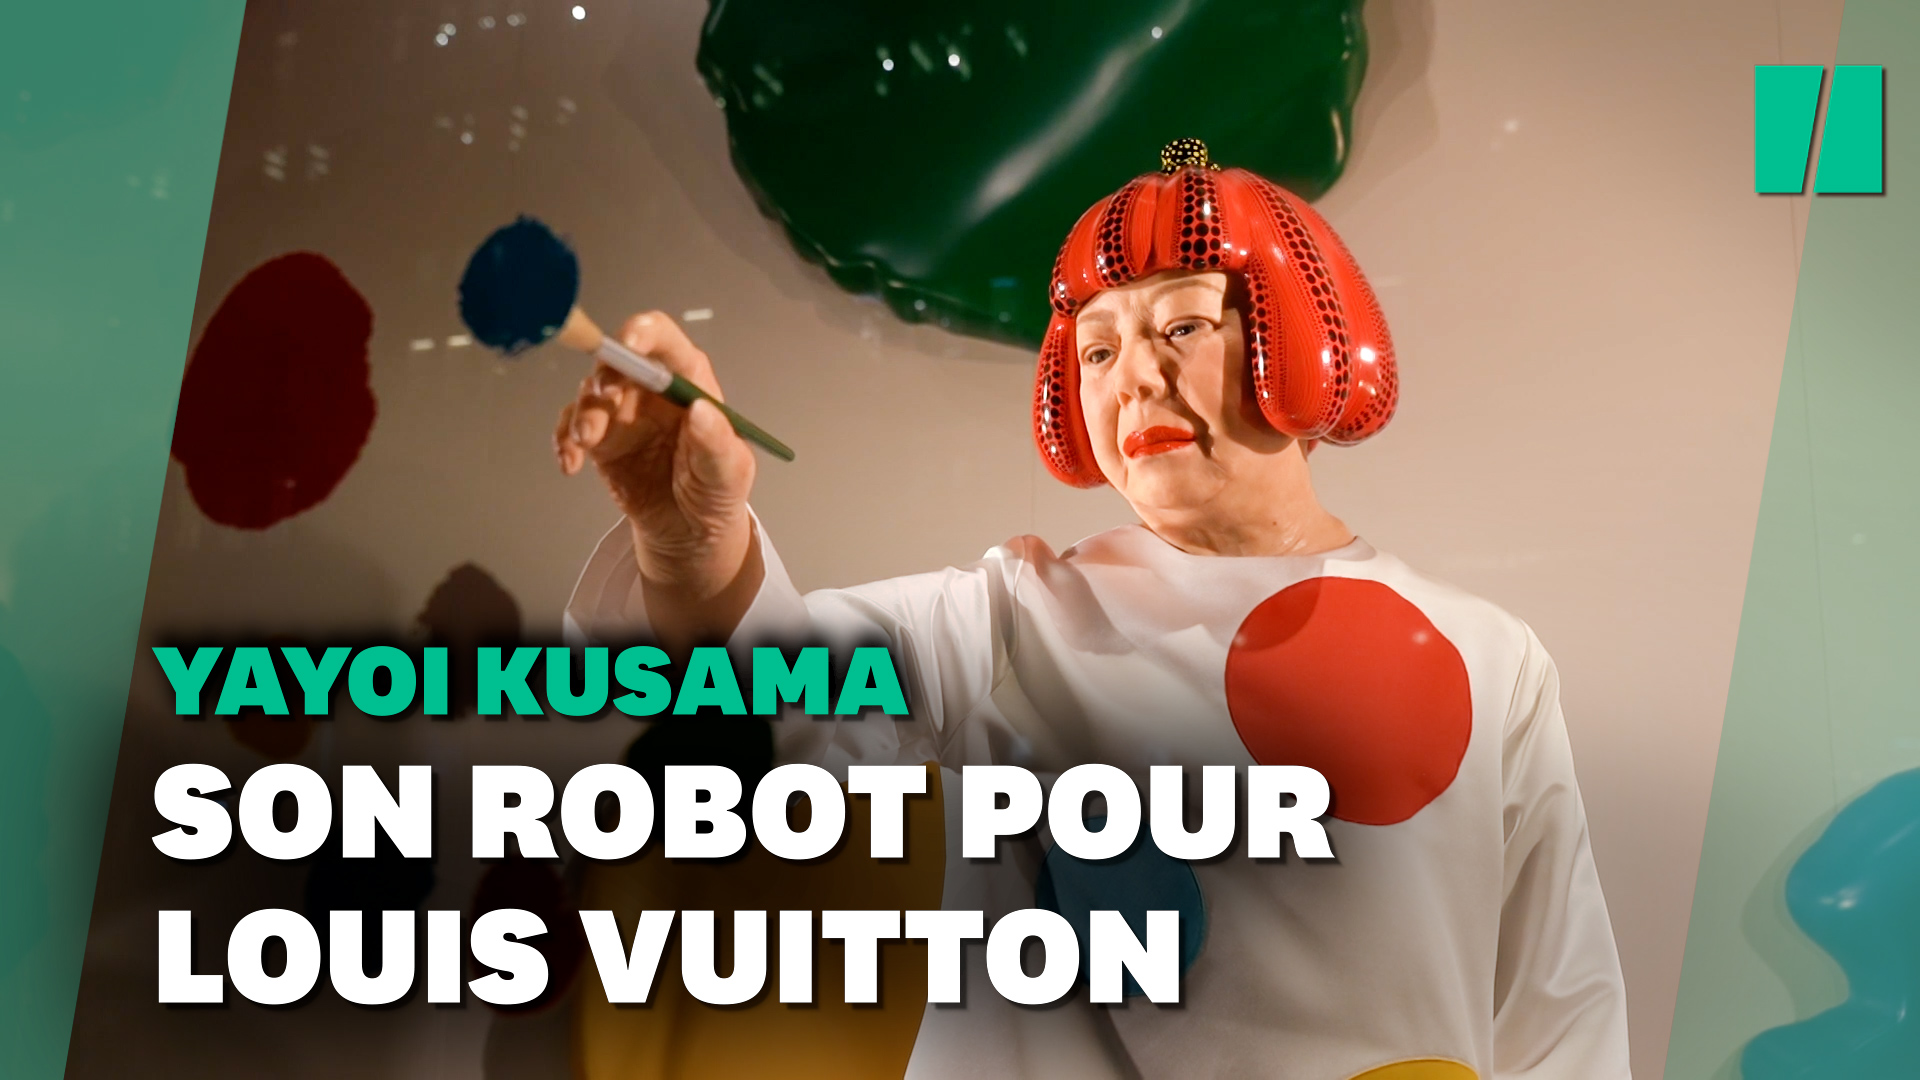 Louis Vuitton installs Yayoi Kusama robots at stores 